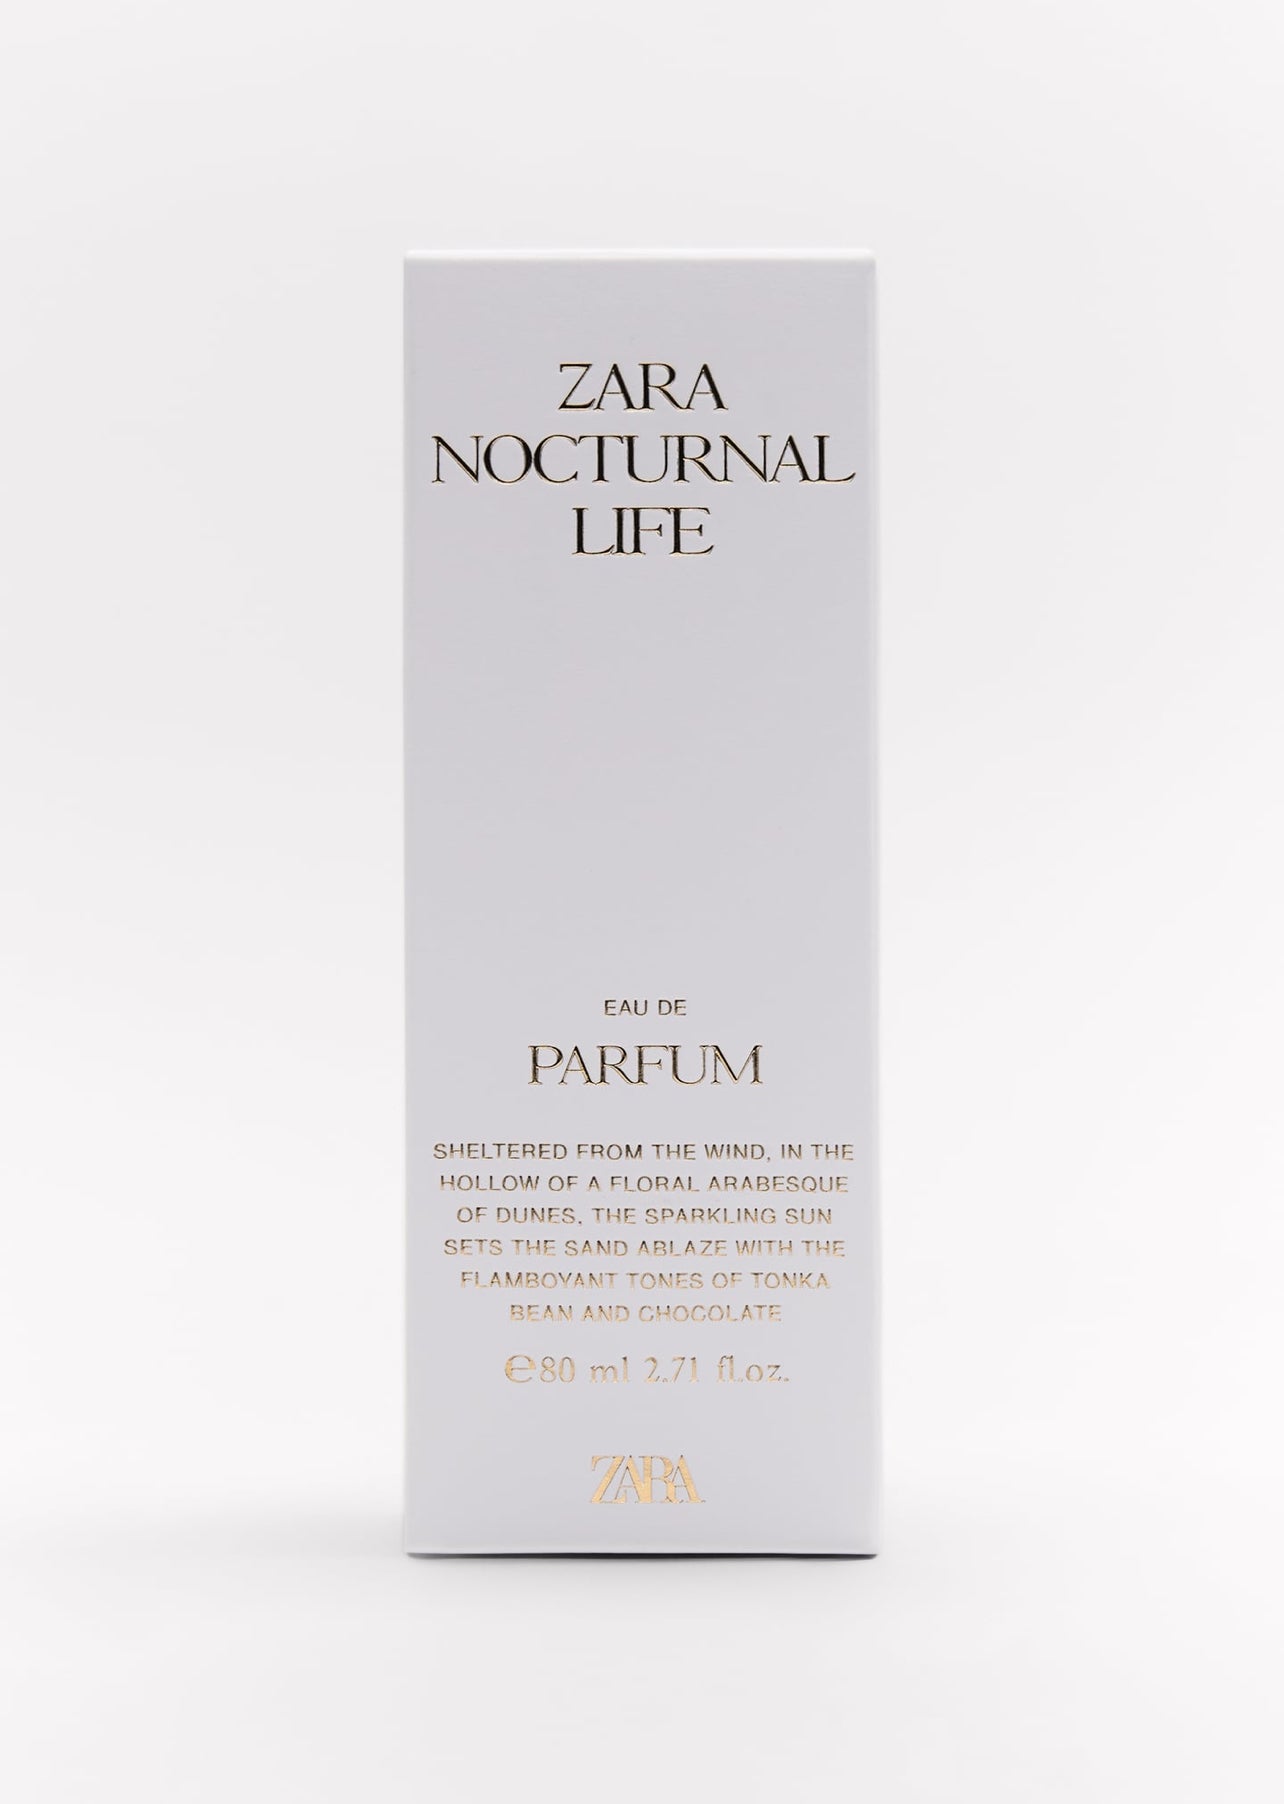 Zara Nocturnal Life 80ml 2.71fl oz